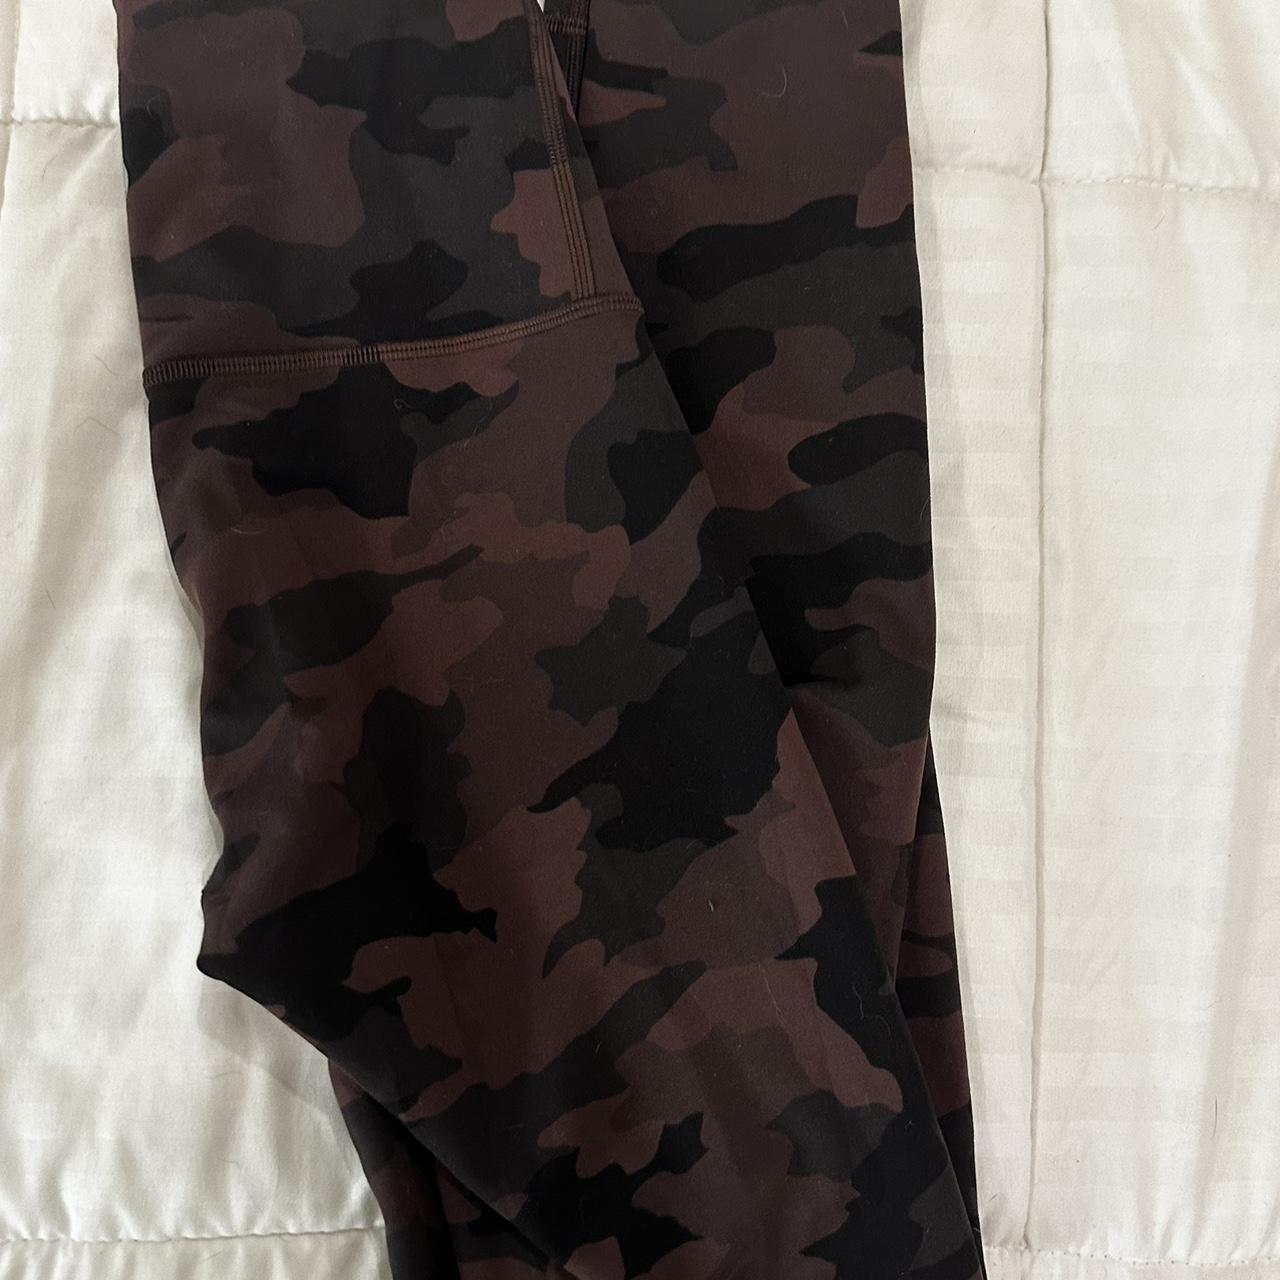 LULULEMON -brown camo leggings -size 2 (worn - Depop